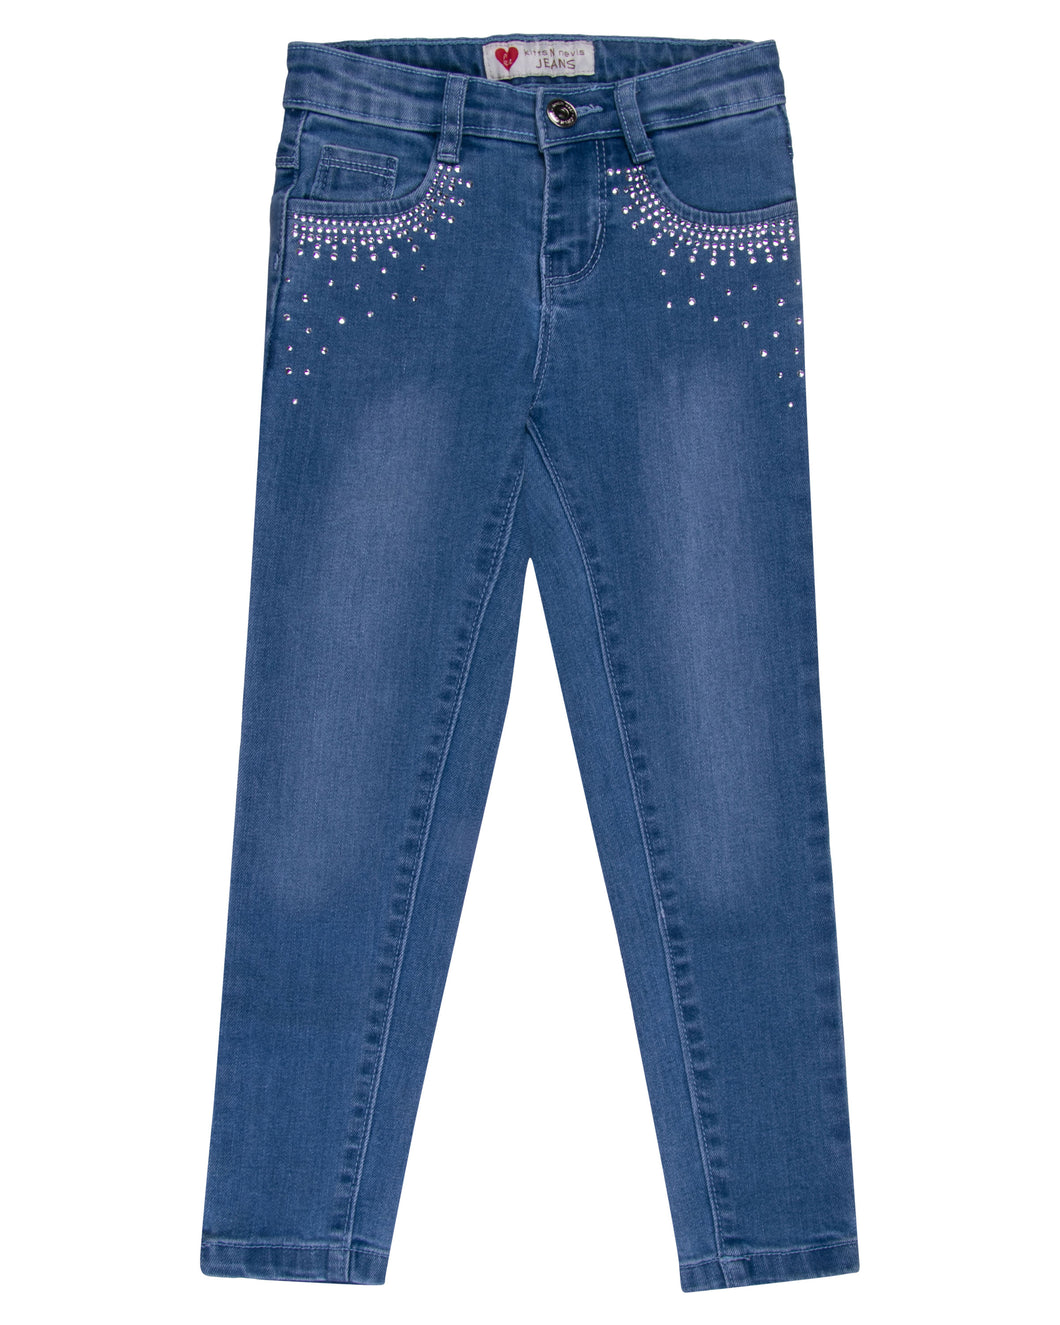 Girls Fashion Light Blue Jeans